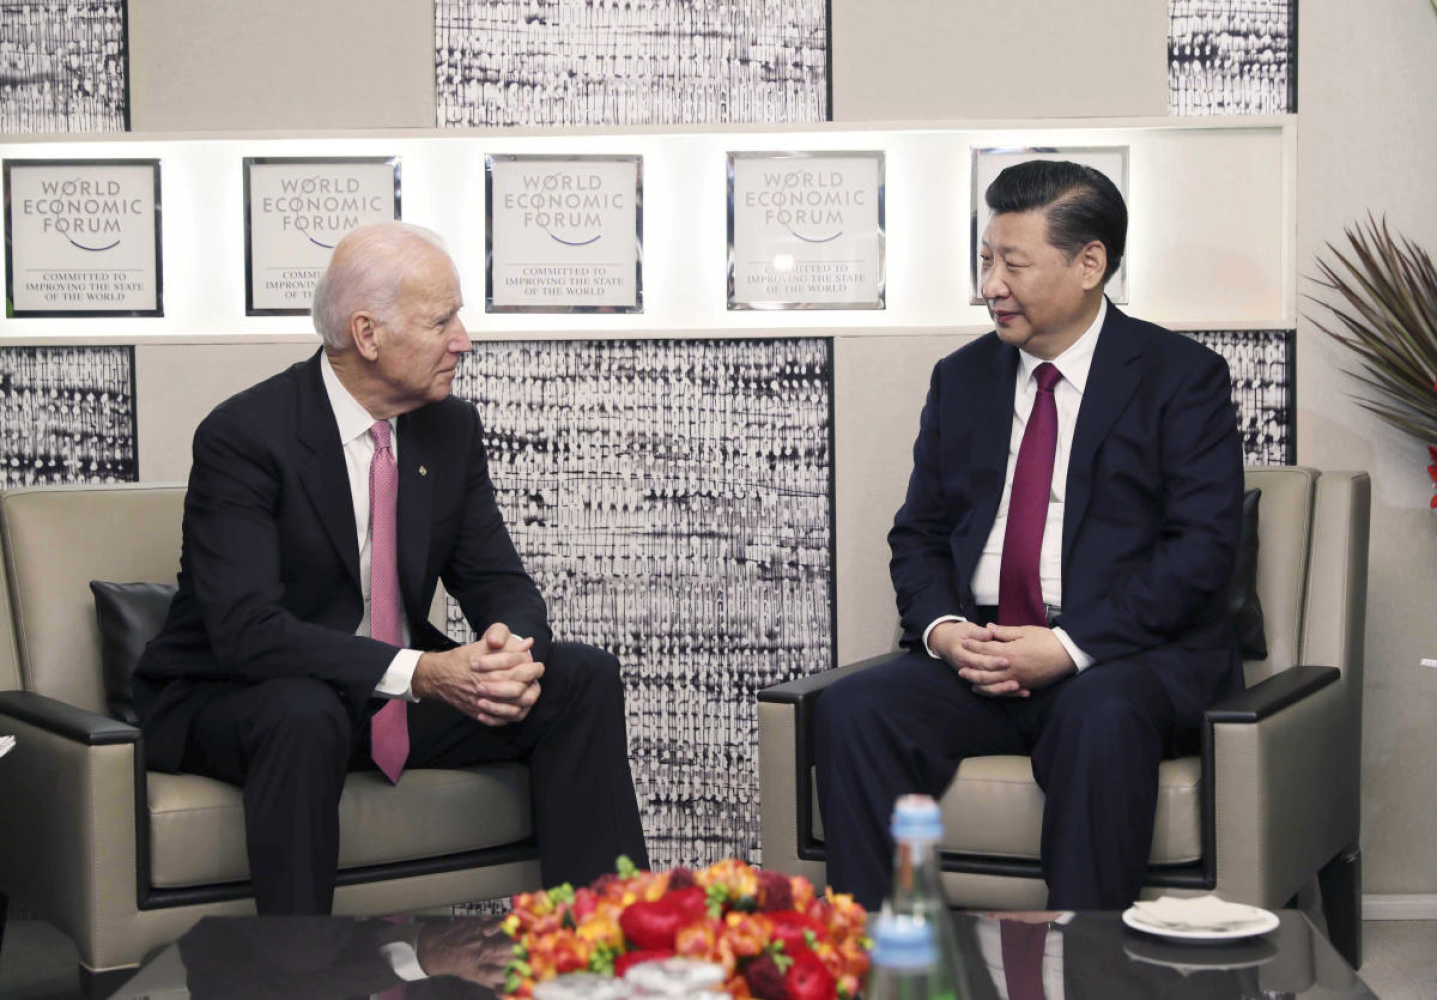 Biden will meet with Xi at the g20 summit